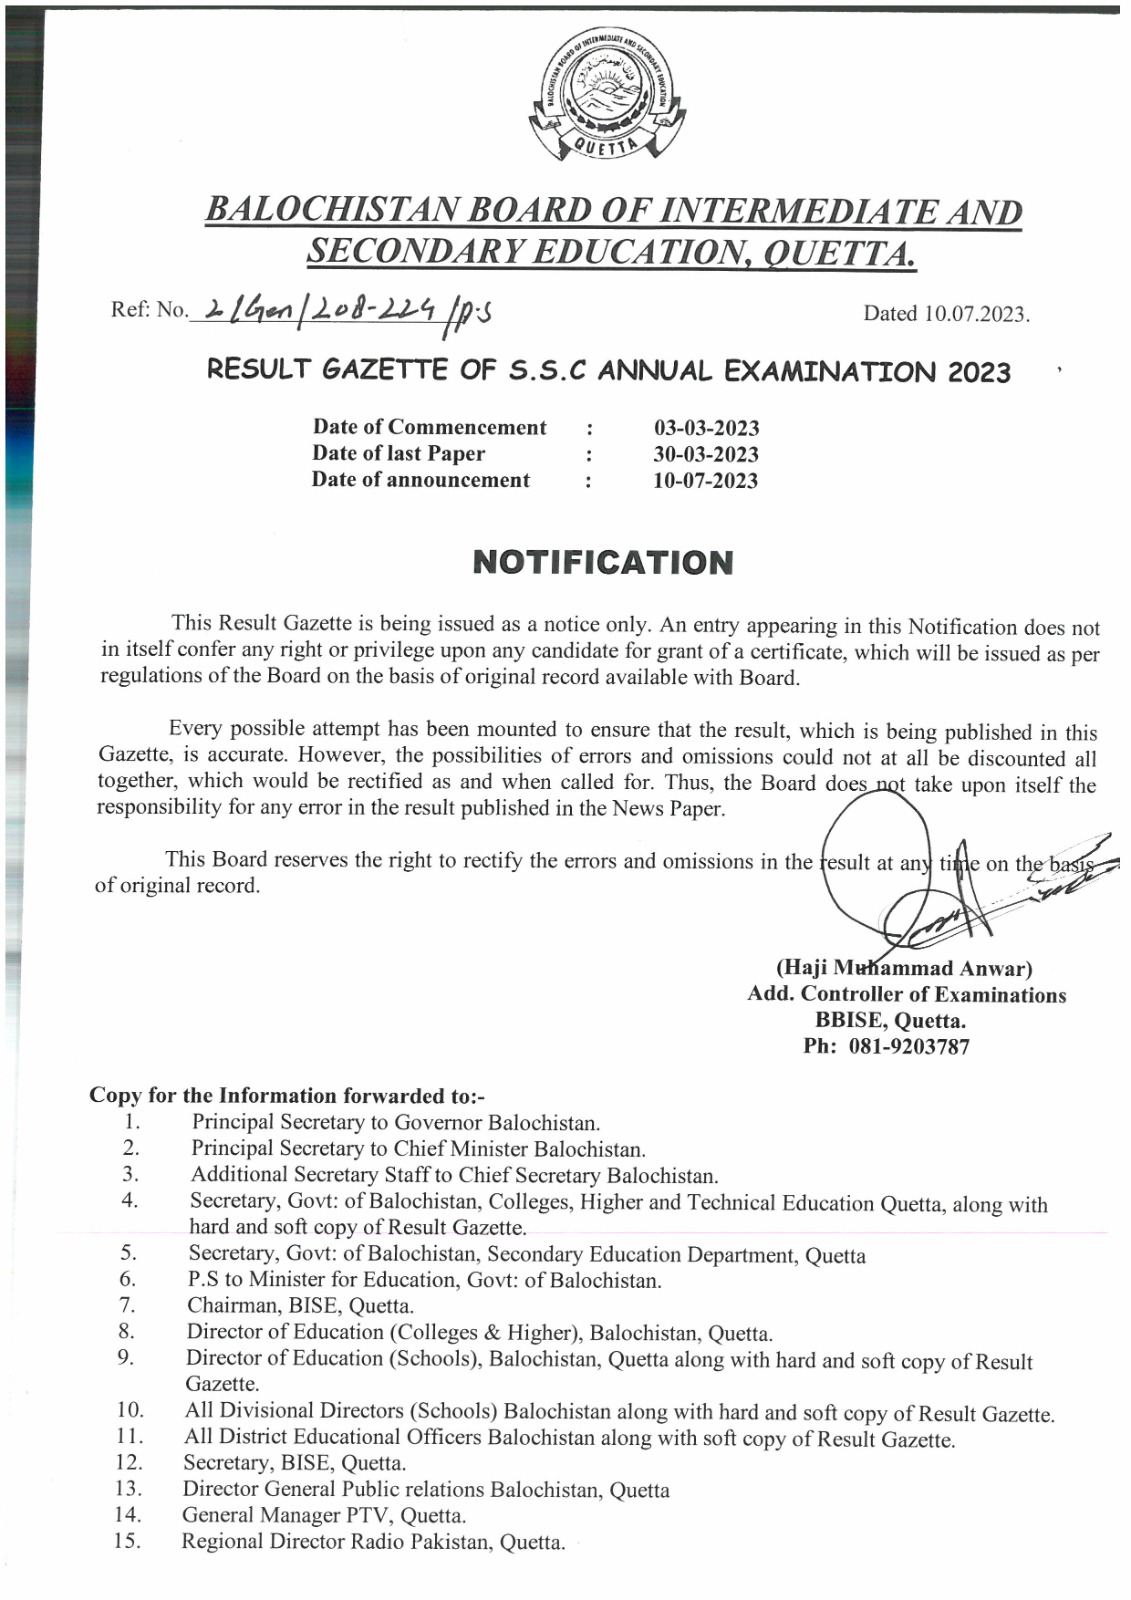 BISE Hamara Quetta Board 9th Class Result 2023 Gazette Download